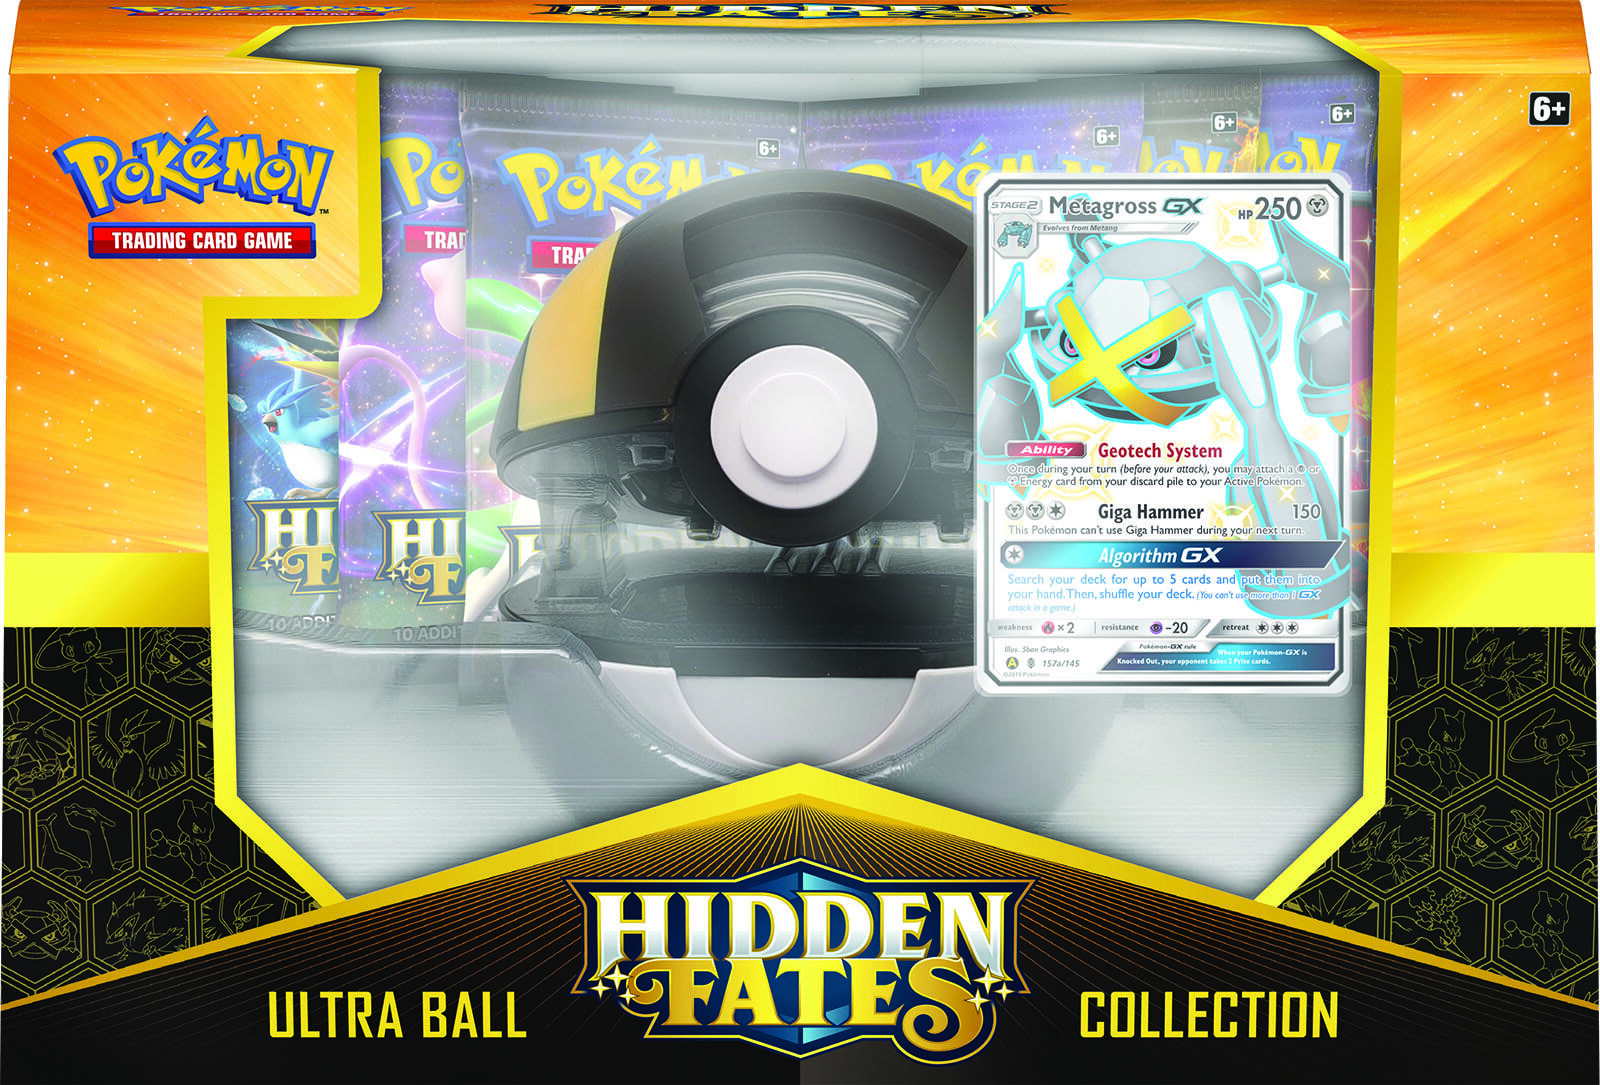 Pokémon Hidden Fates Shiny Metagross-GX Poké Ball Collection